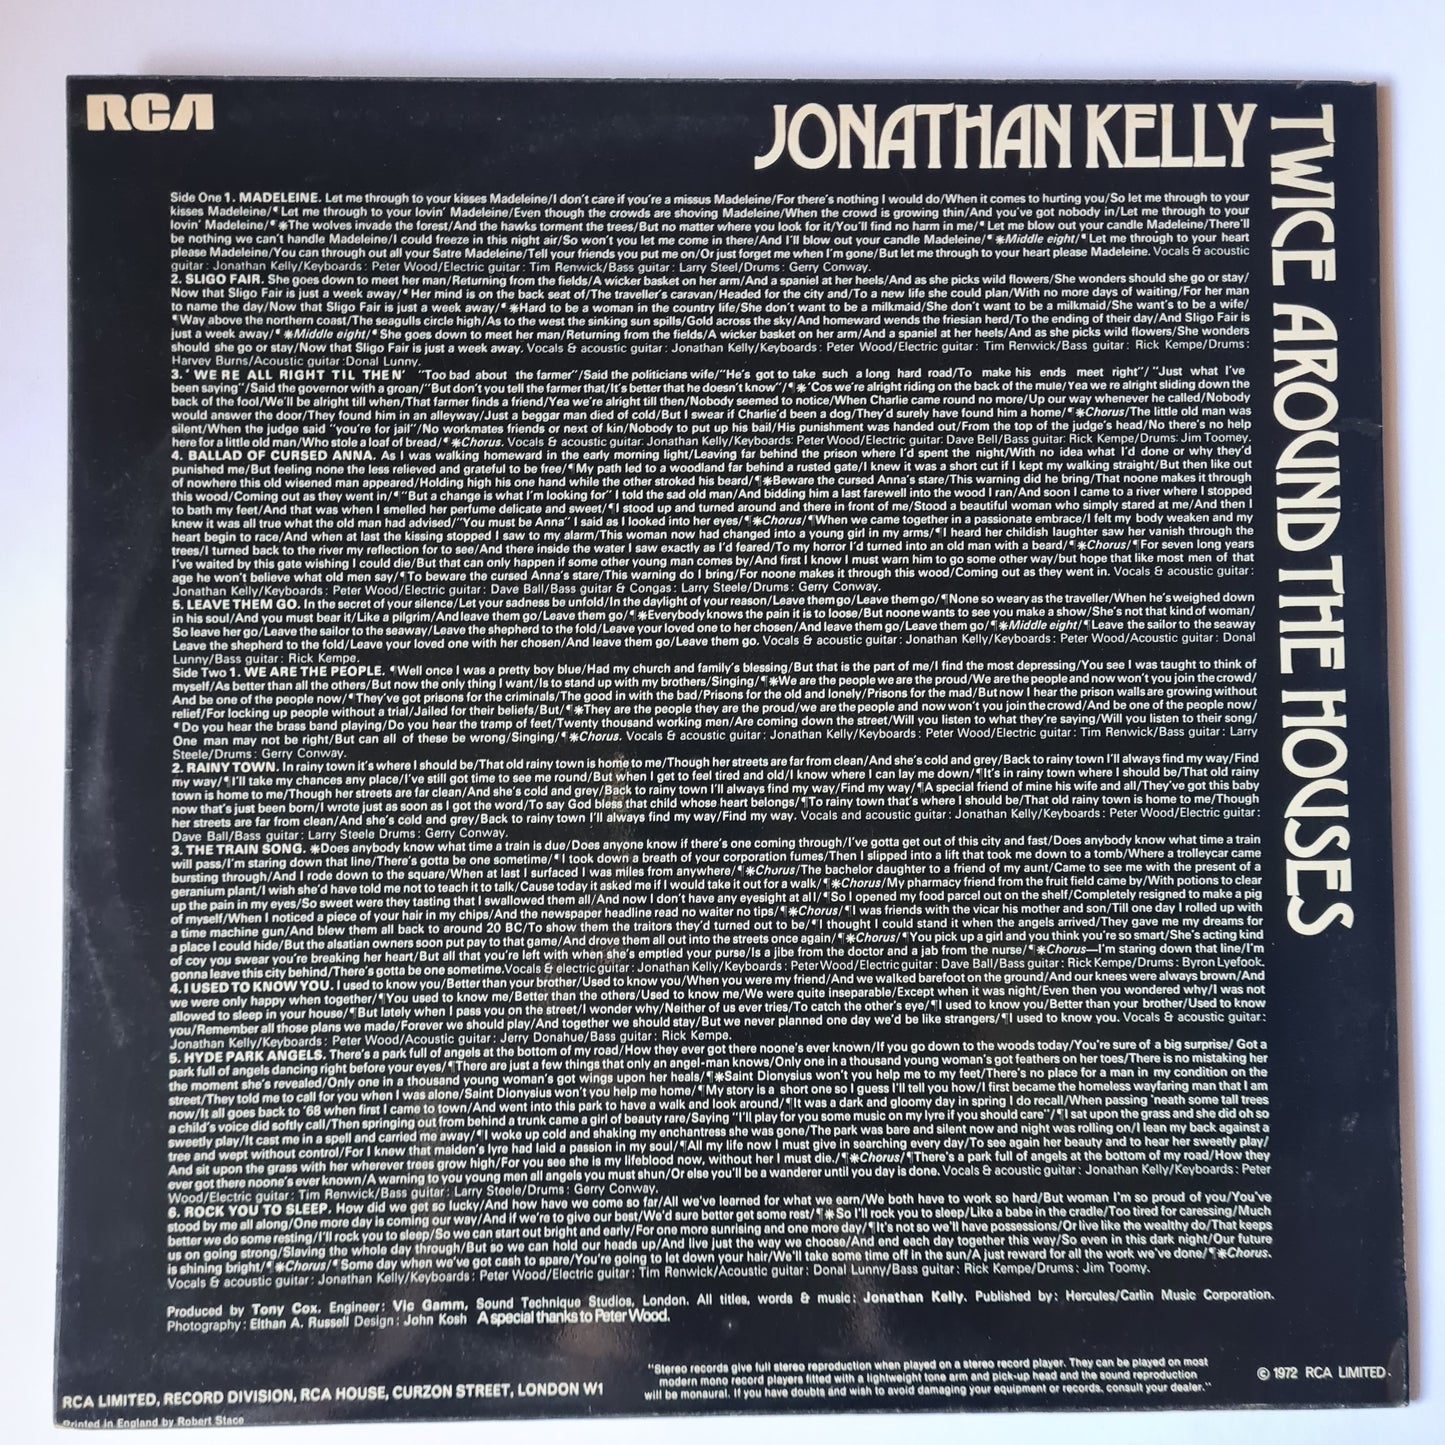 CLEARANCE STOCK! - JONATHAN KELLY - VINYL RECORD